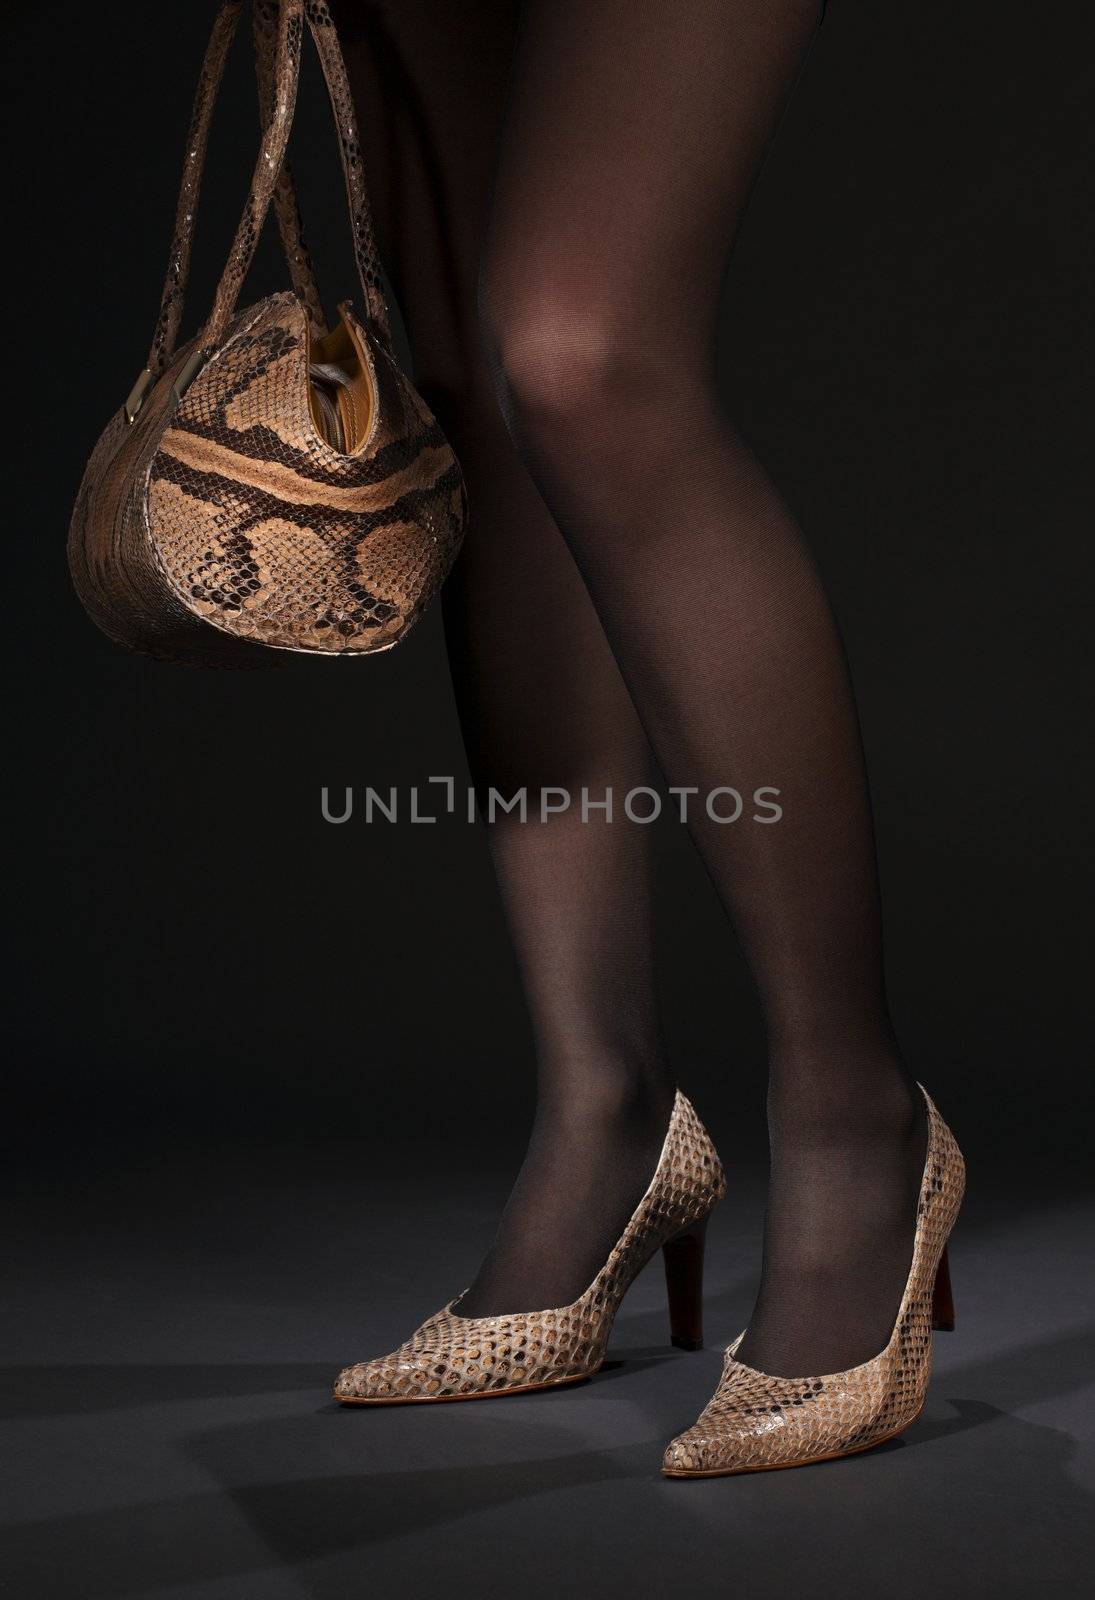 long legs in snakeskin shoes with handbag over black